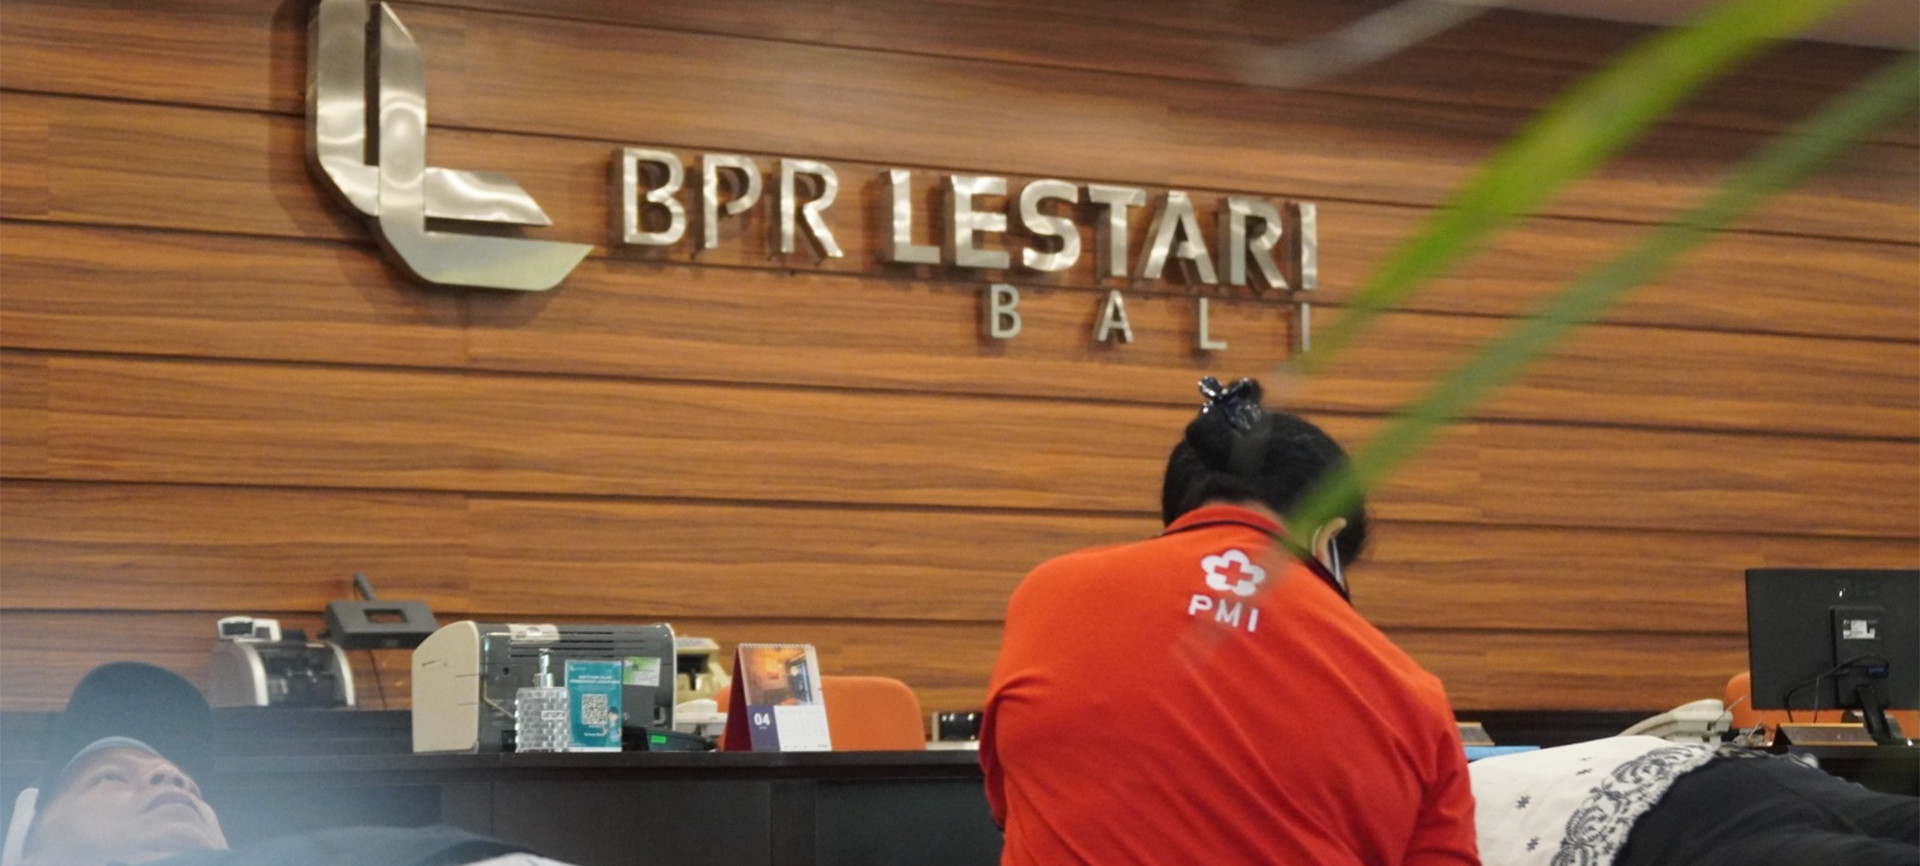 Memperingati Hari Sumpah Pemuda, Bank Lestari Bali (BPR) Adakan Kegiatan Donor Darah